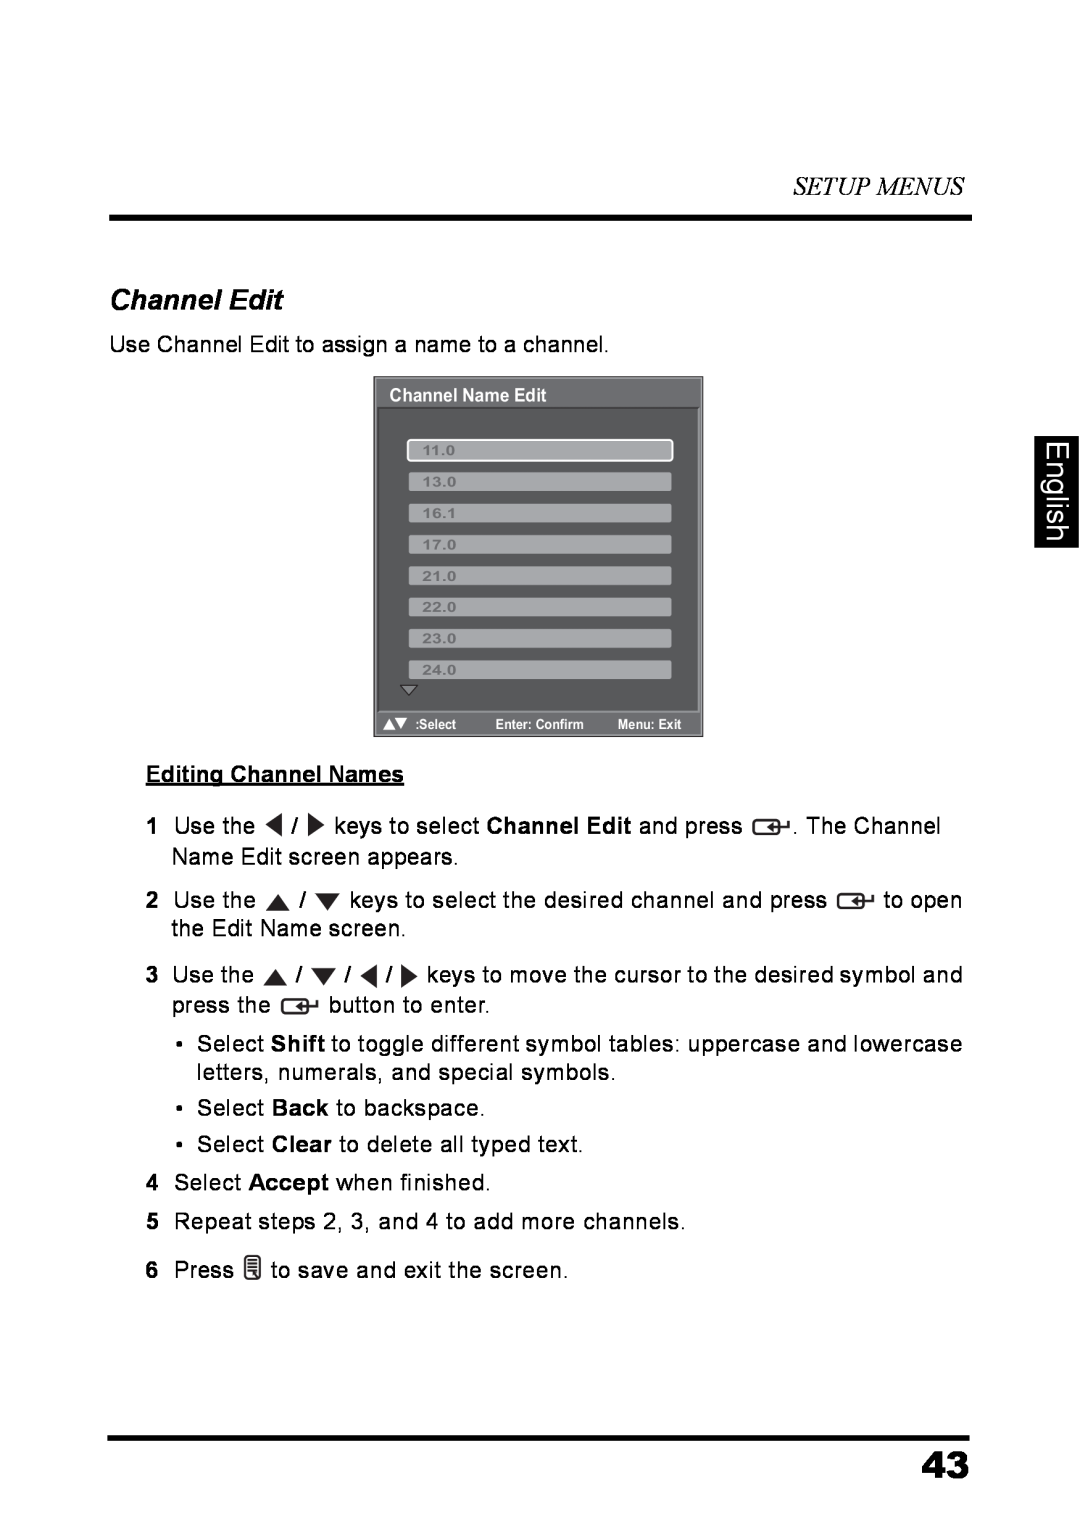 Westinghouse LD-3237 user manual Channel Edit, English, Setup Menus, Editing Channel Names 